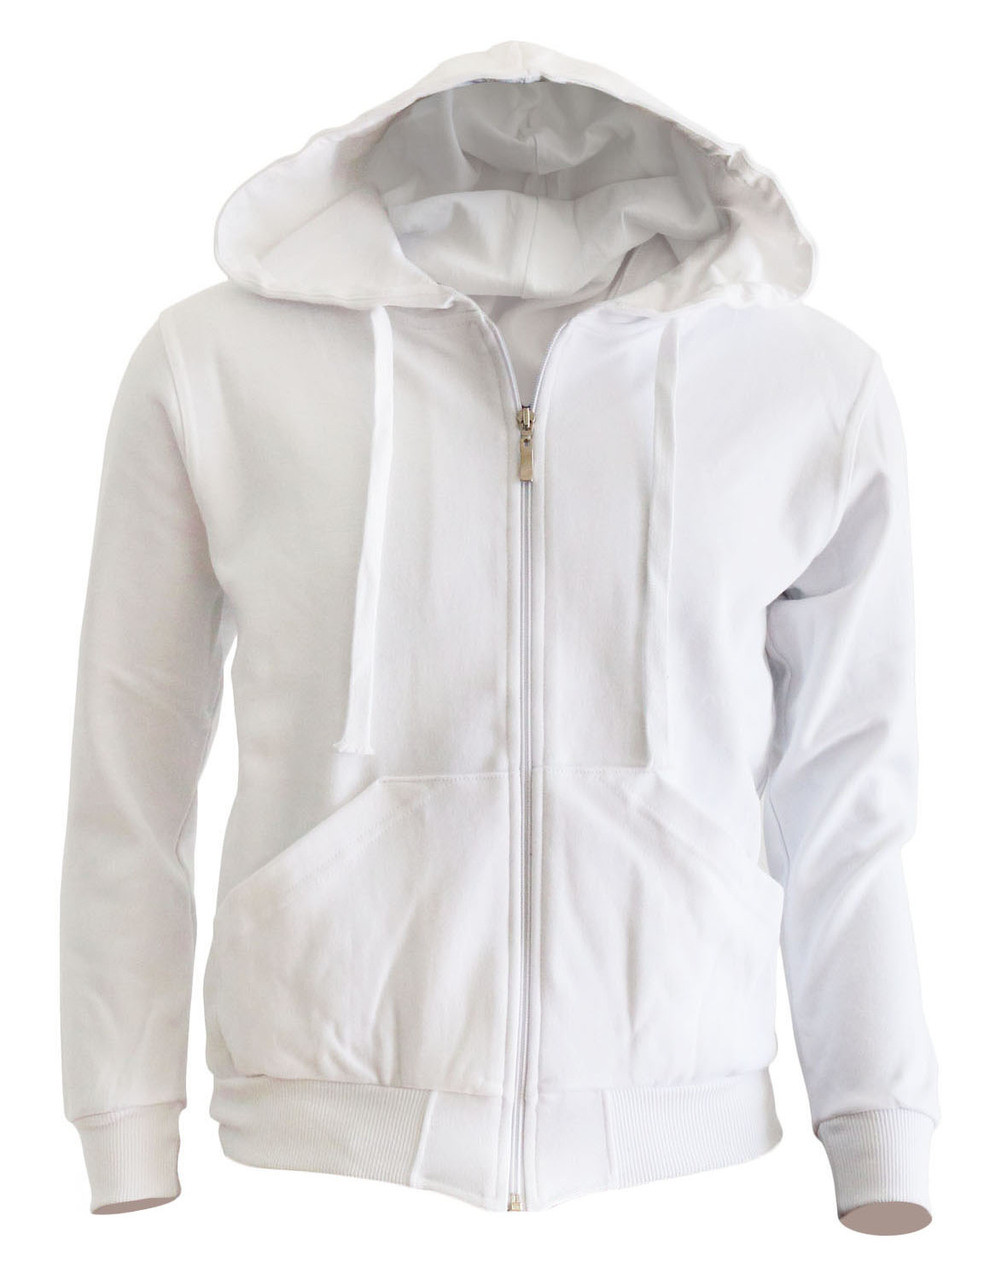 BCPOLO zipper hoodie jumper Zip-Hoodie, Solid Cotton Zip-up hoodie ...